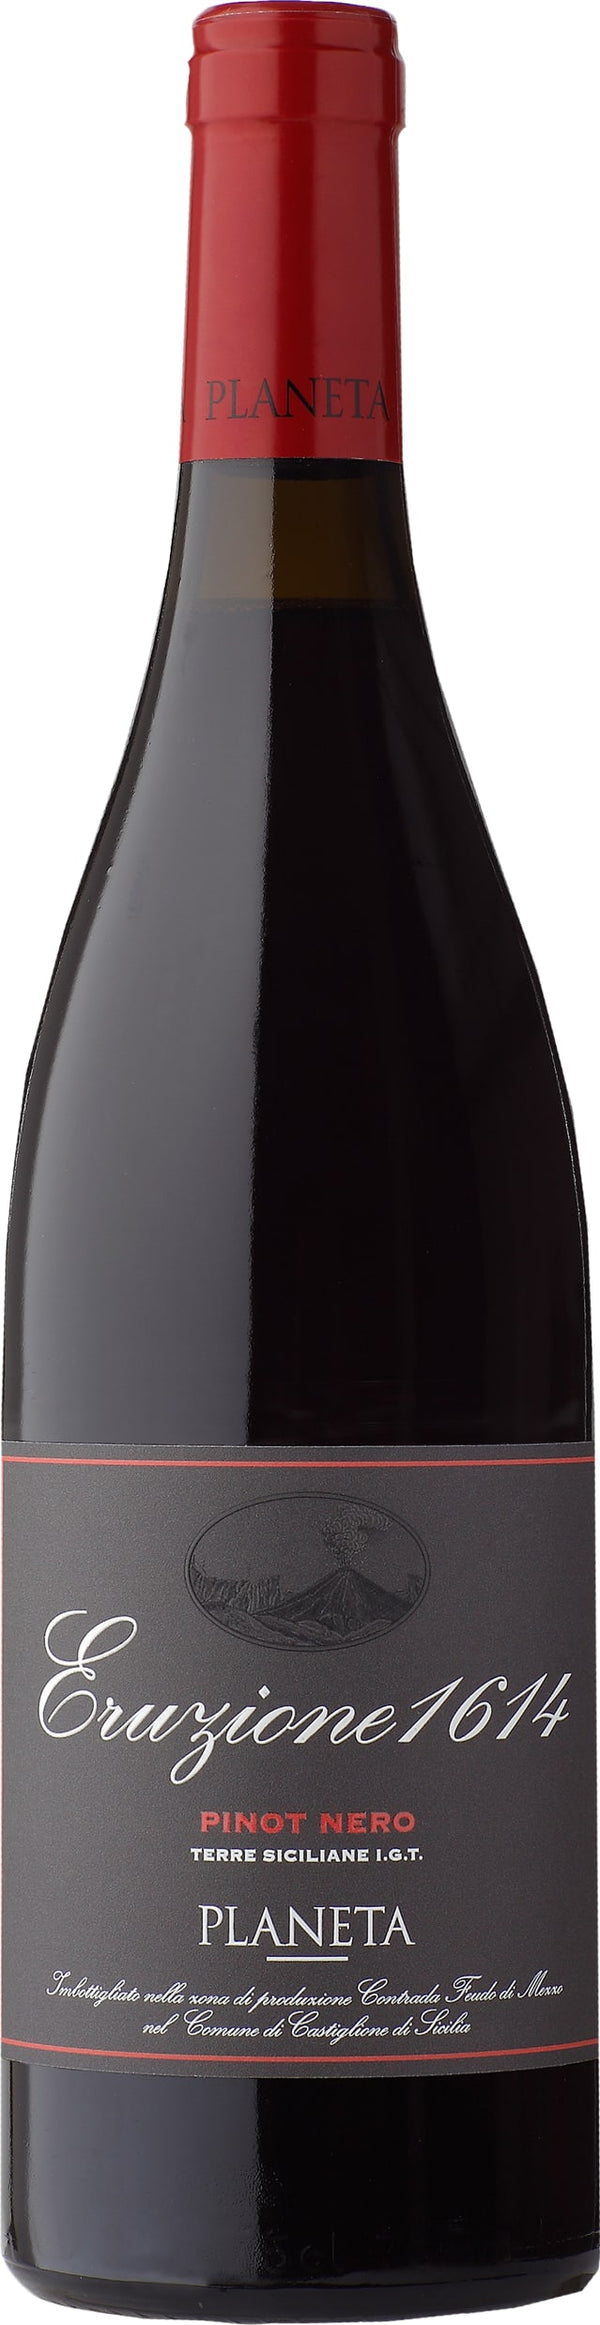 Planeta Eruzione 1614 Etna Pinot Nero 2020 6x75cl - Just Wines 